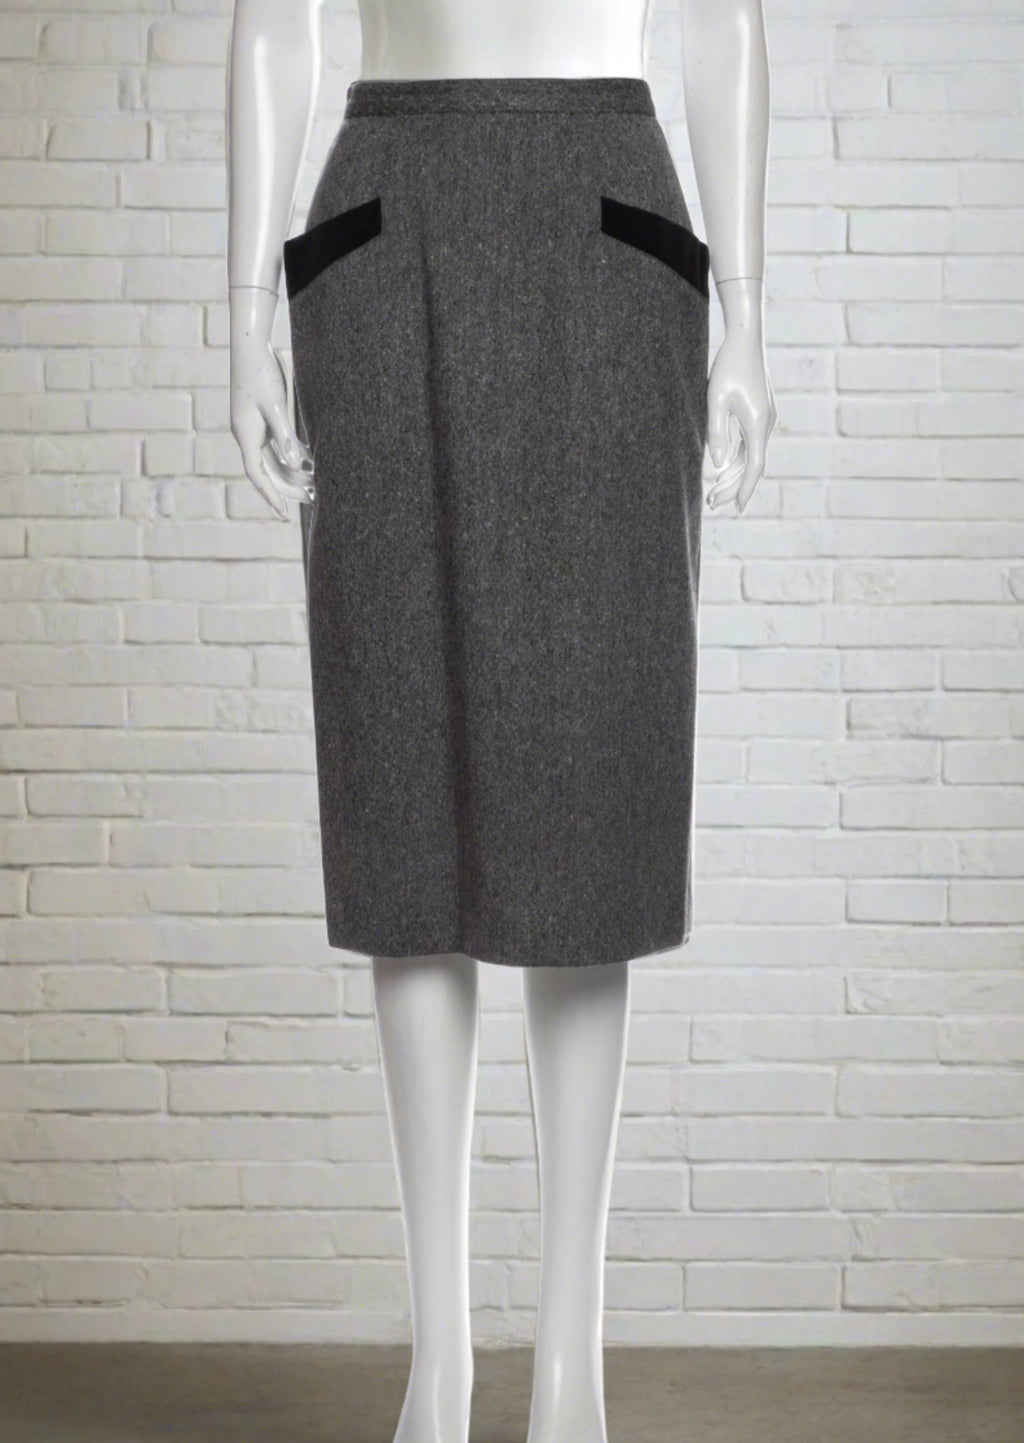 Cacharel Vintage Gray/Black Wool Skirt